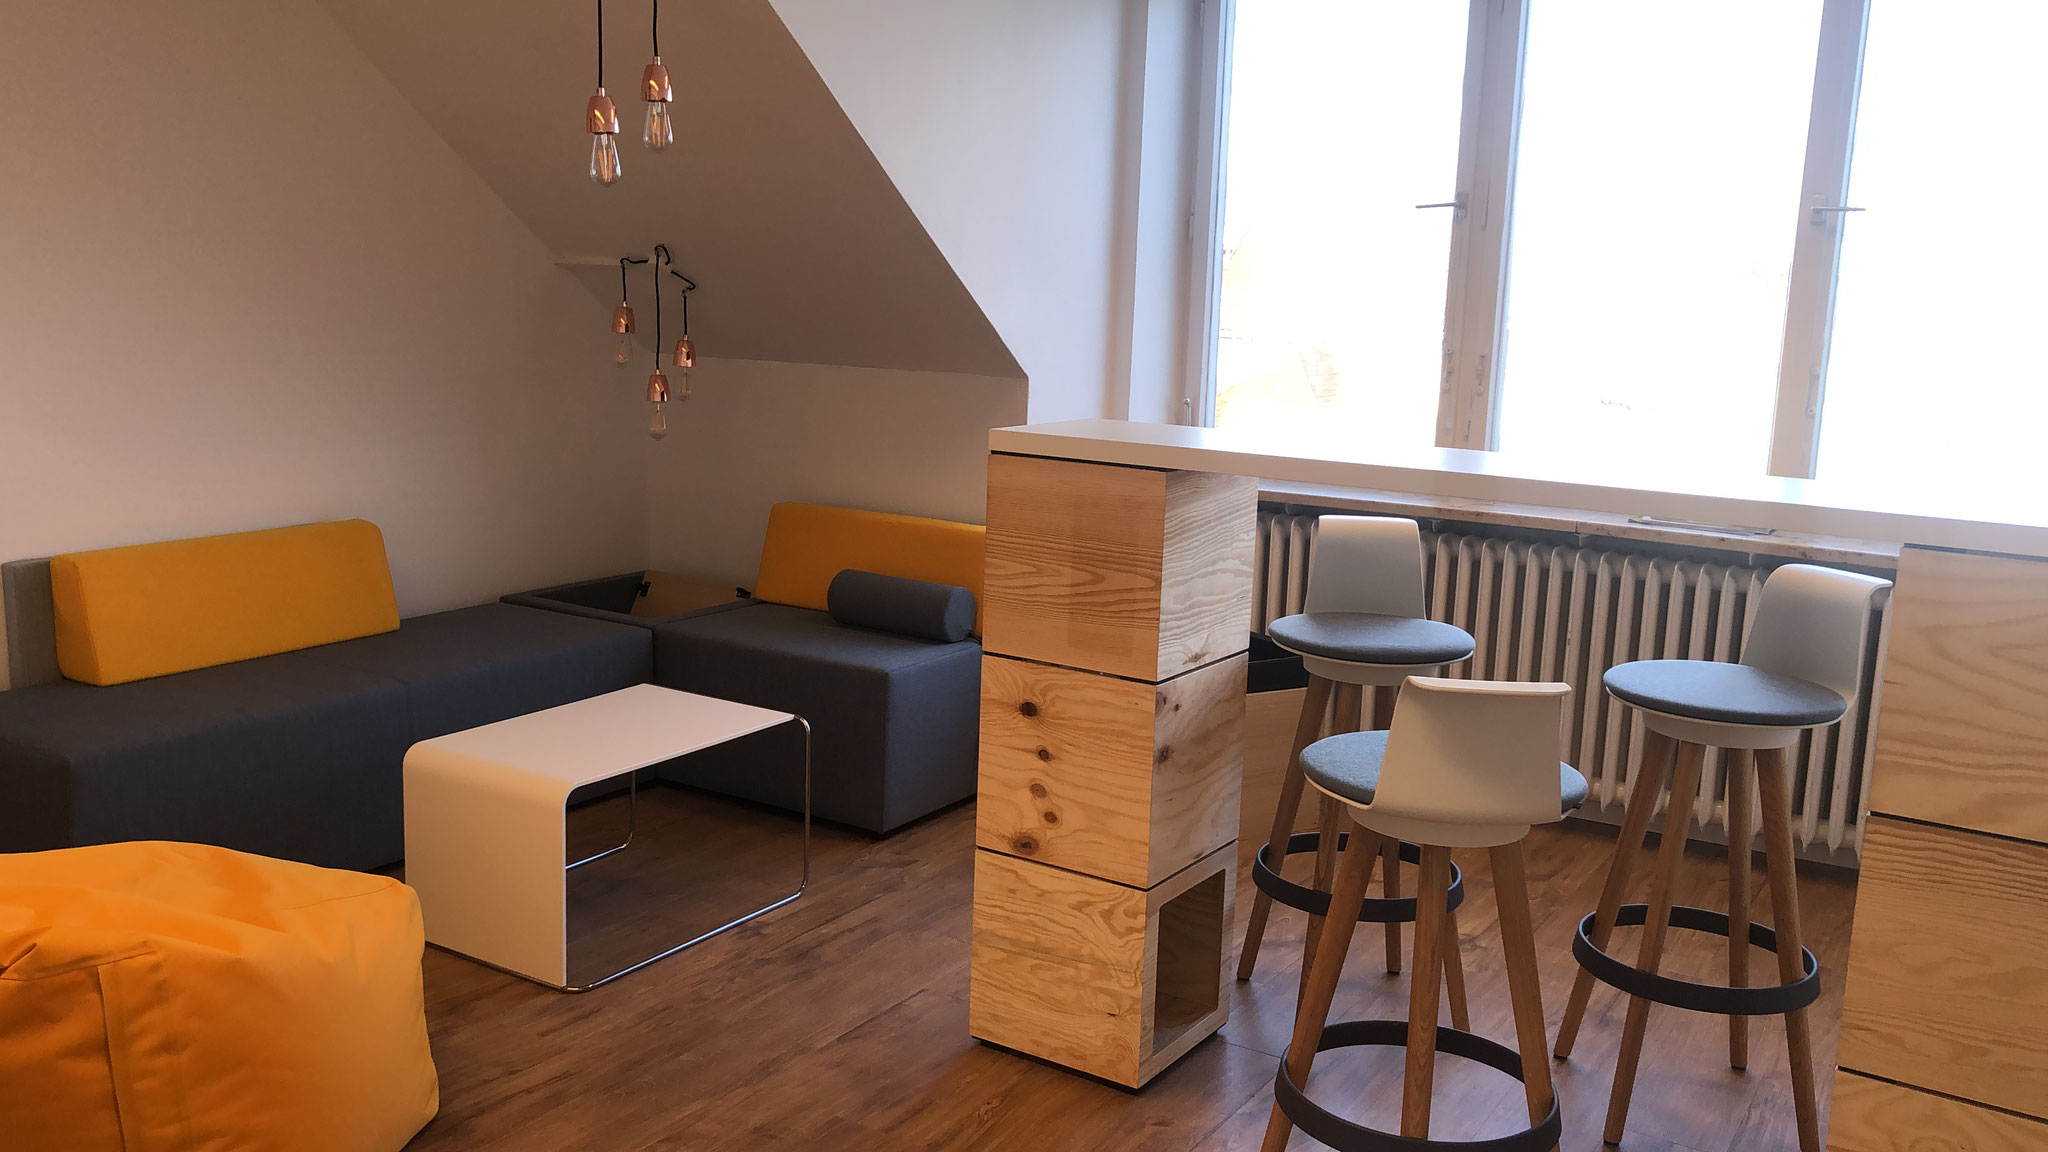 Project Rooms Munich Uhs Unique Home Solutions